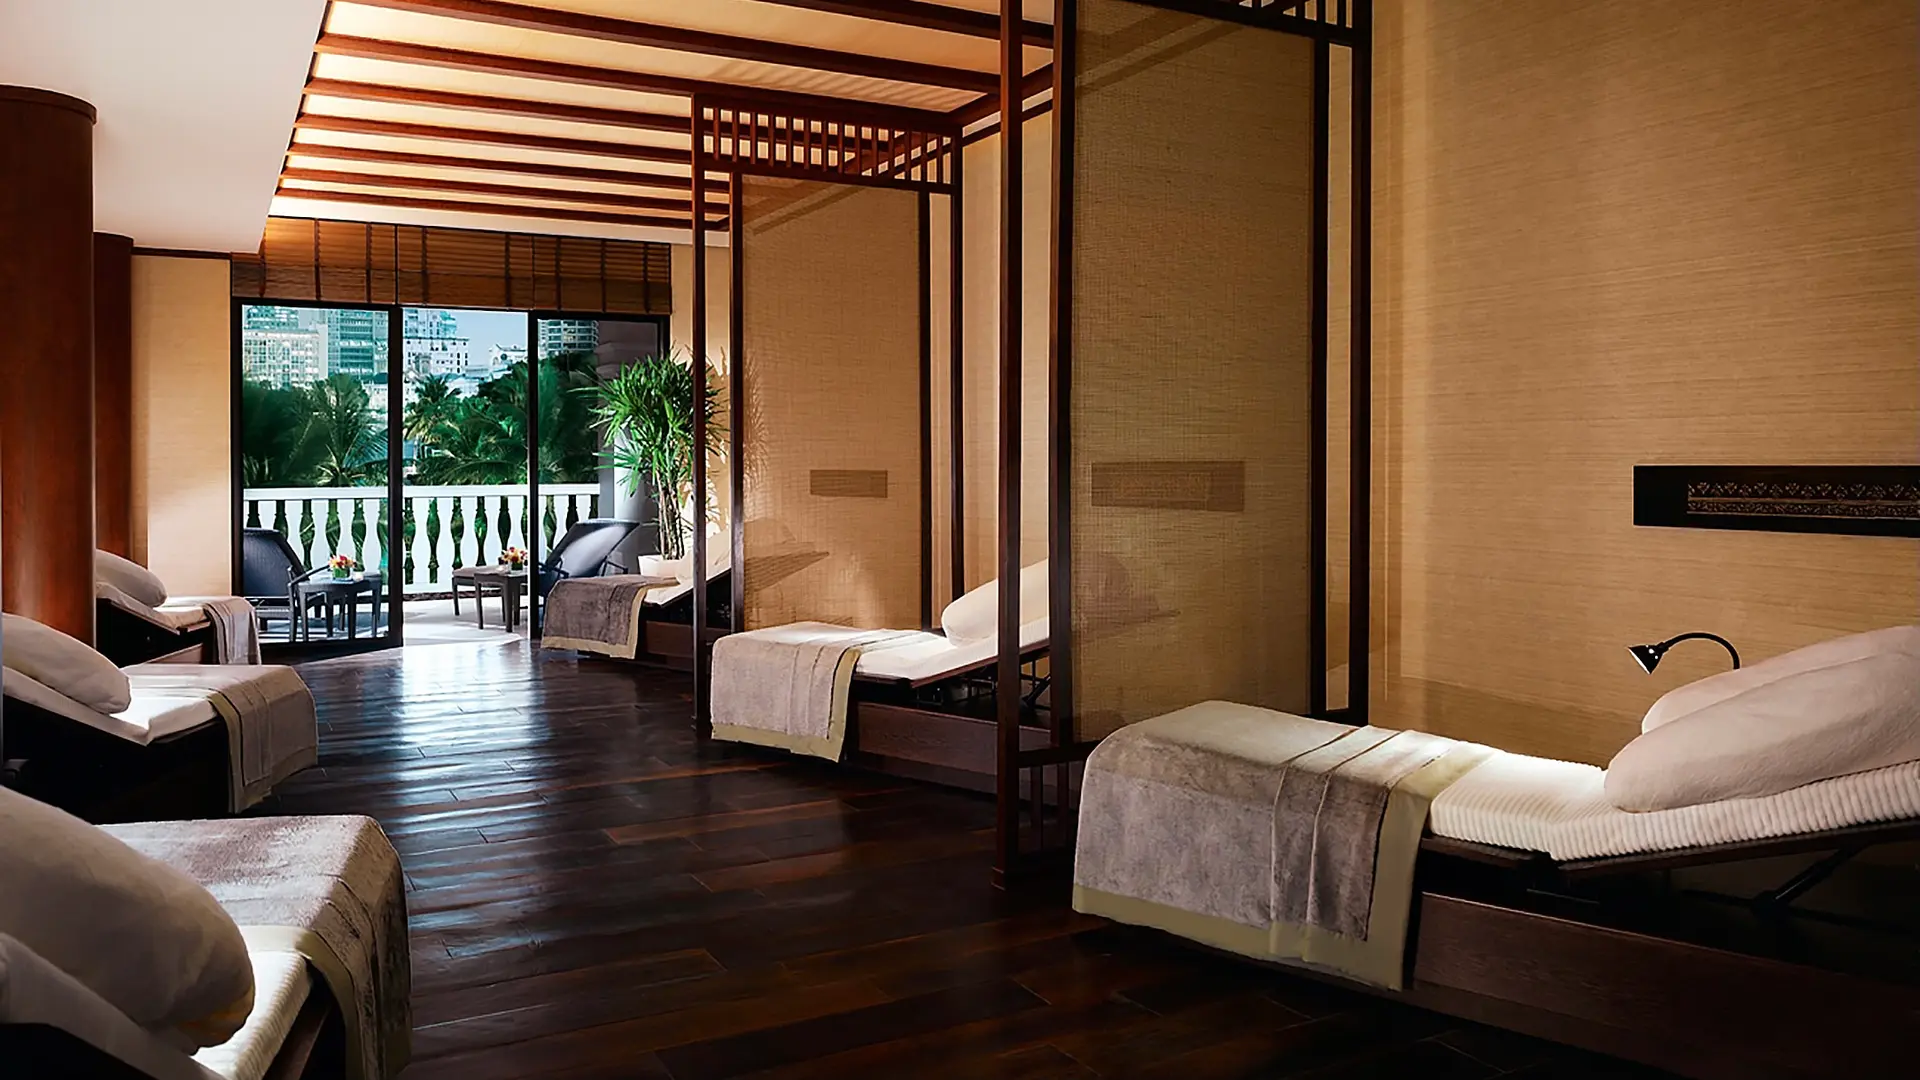 Hotel review Service & Facilities' - The Peninsula Bangkok - 3